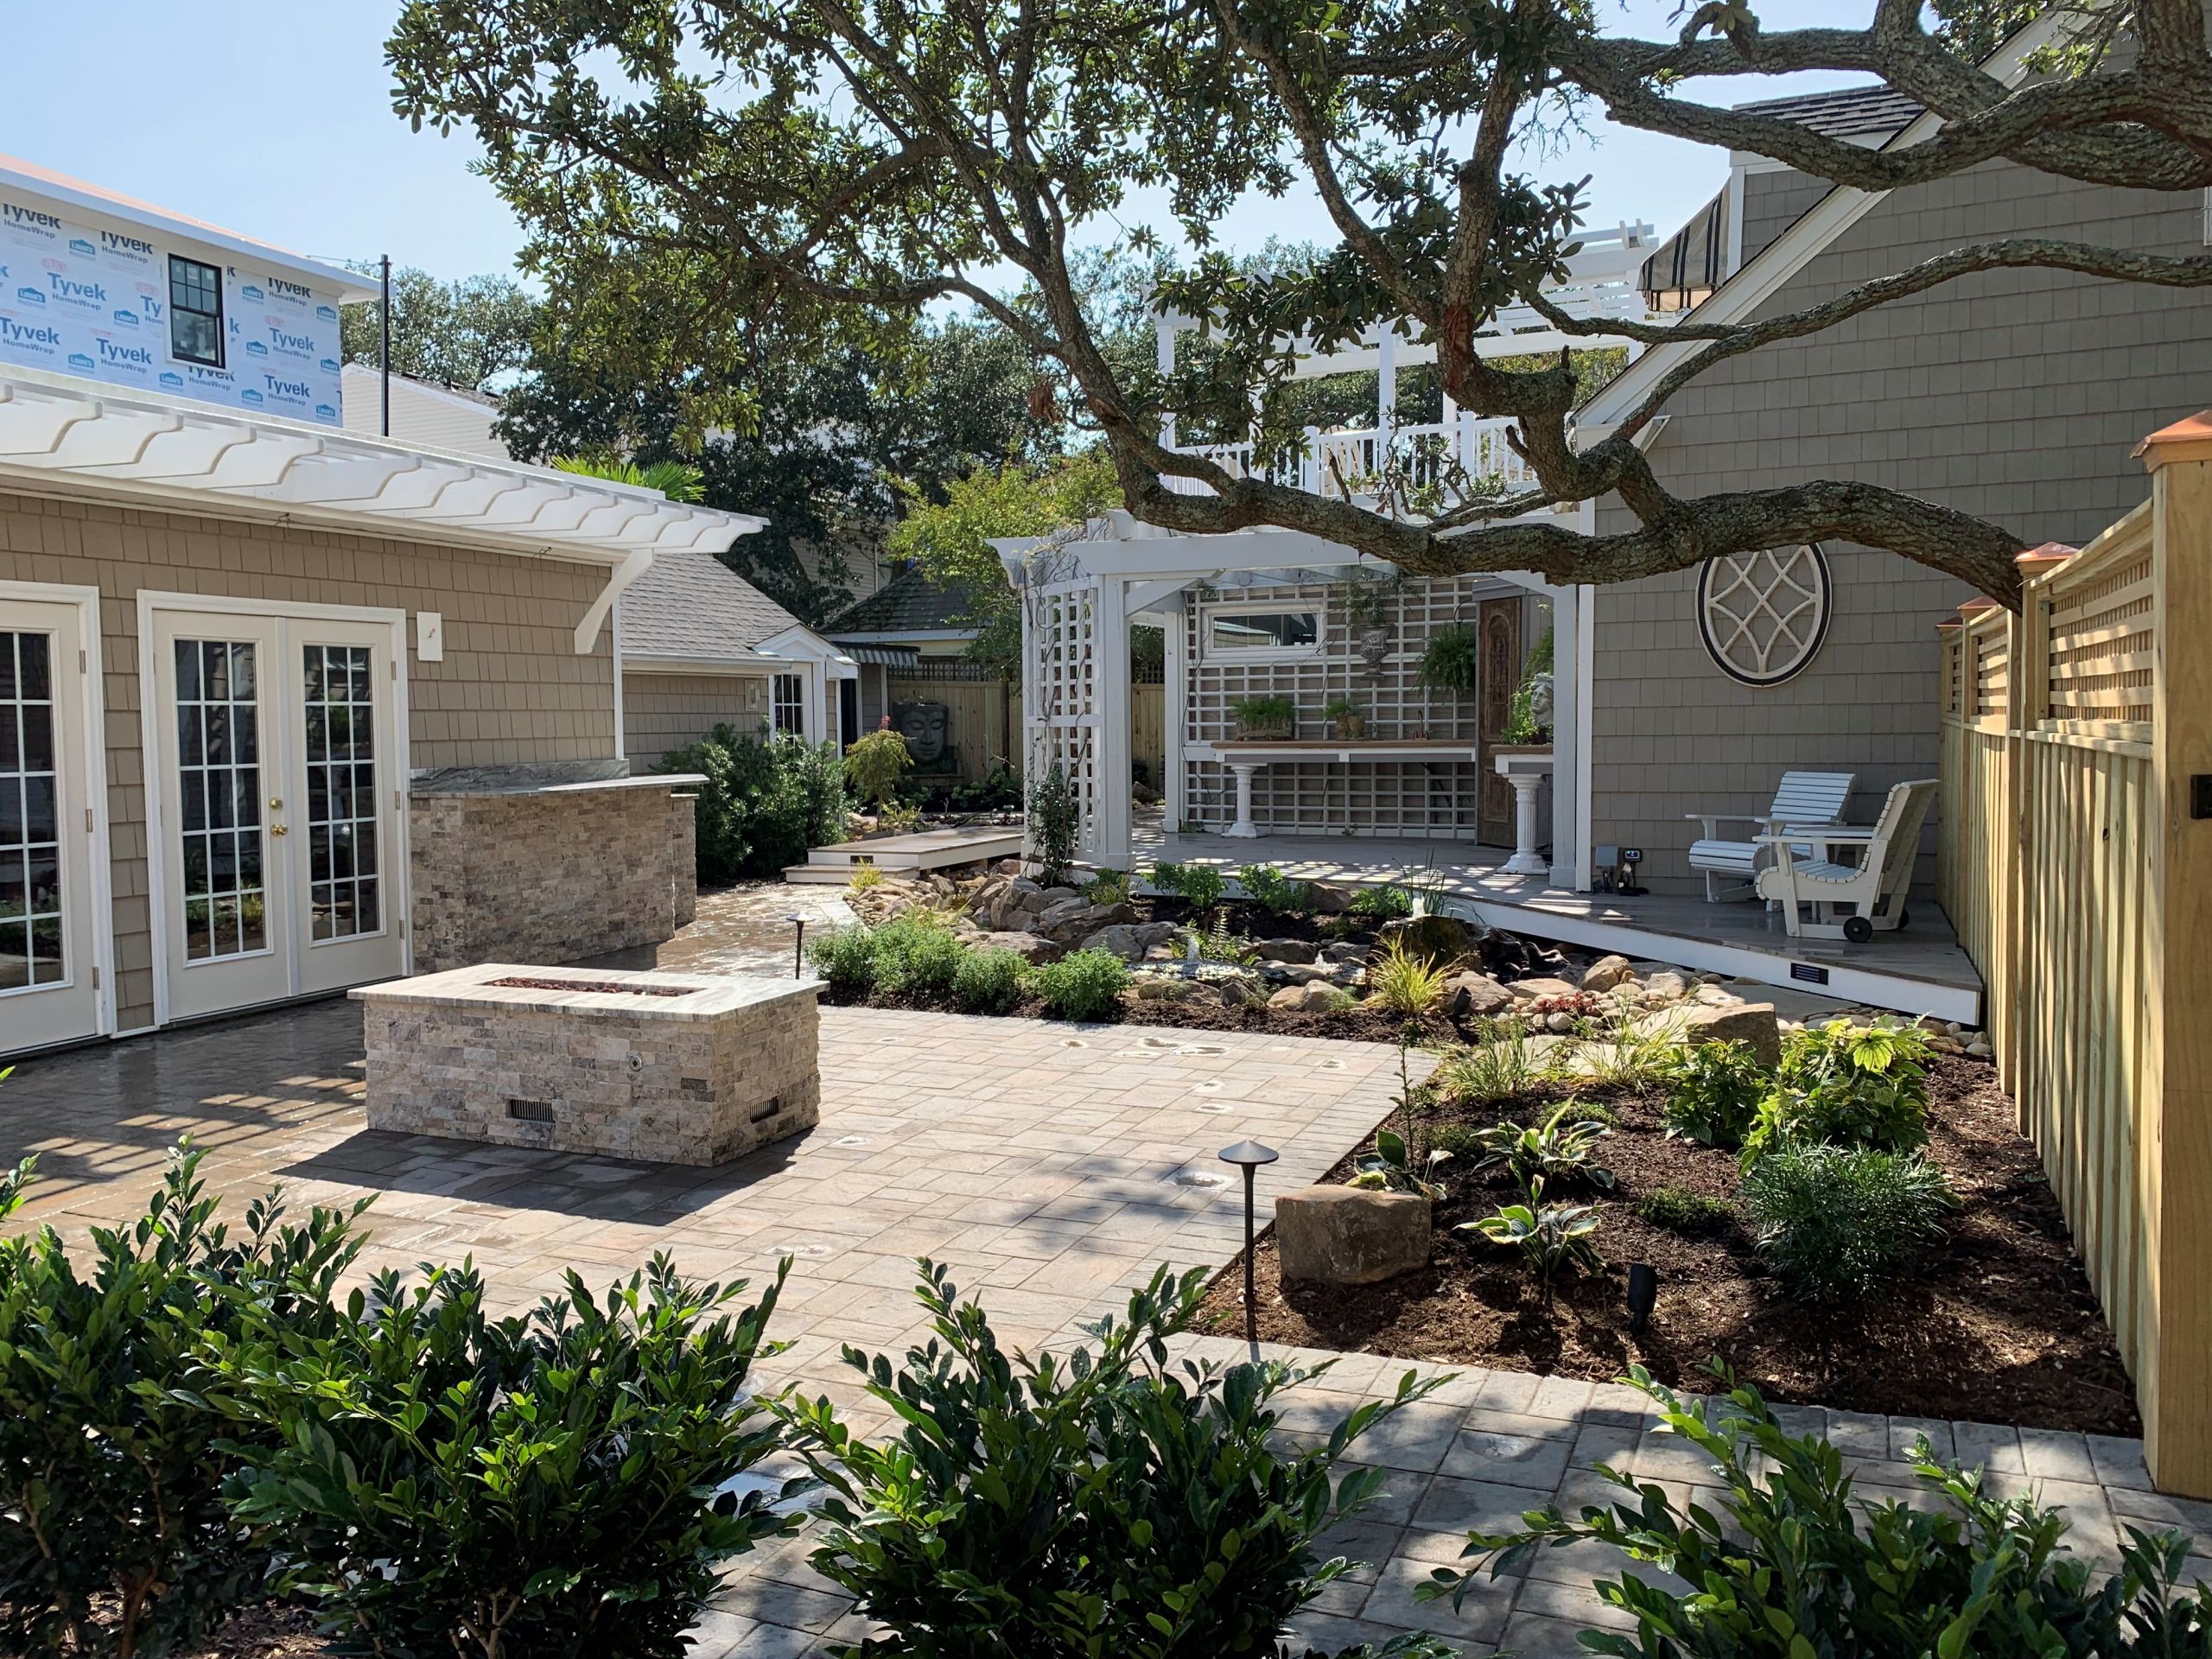 8 Deck And Patio Ideas For Your Hampton Roads Backyard Visionscapes Land Design Architectural Landscape Design Virginia Beach